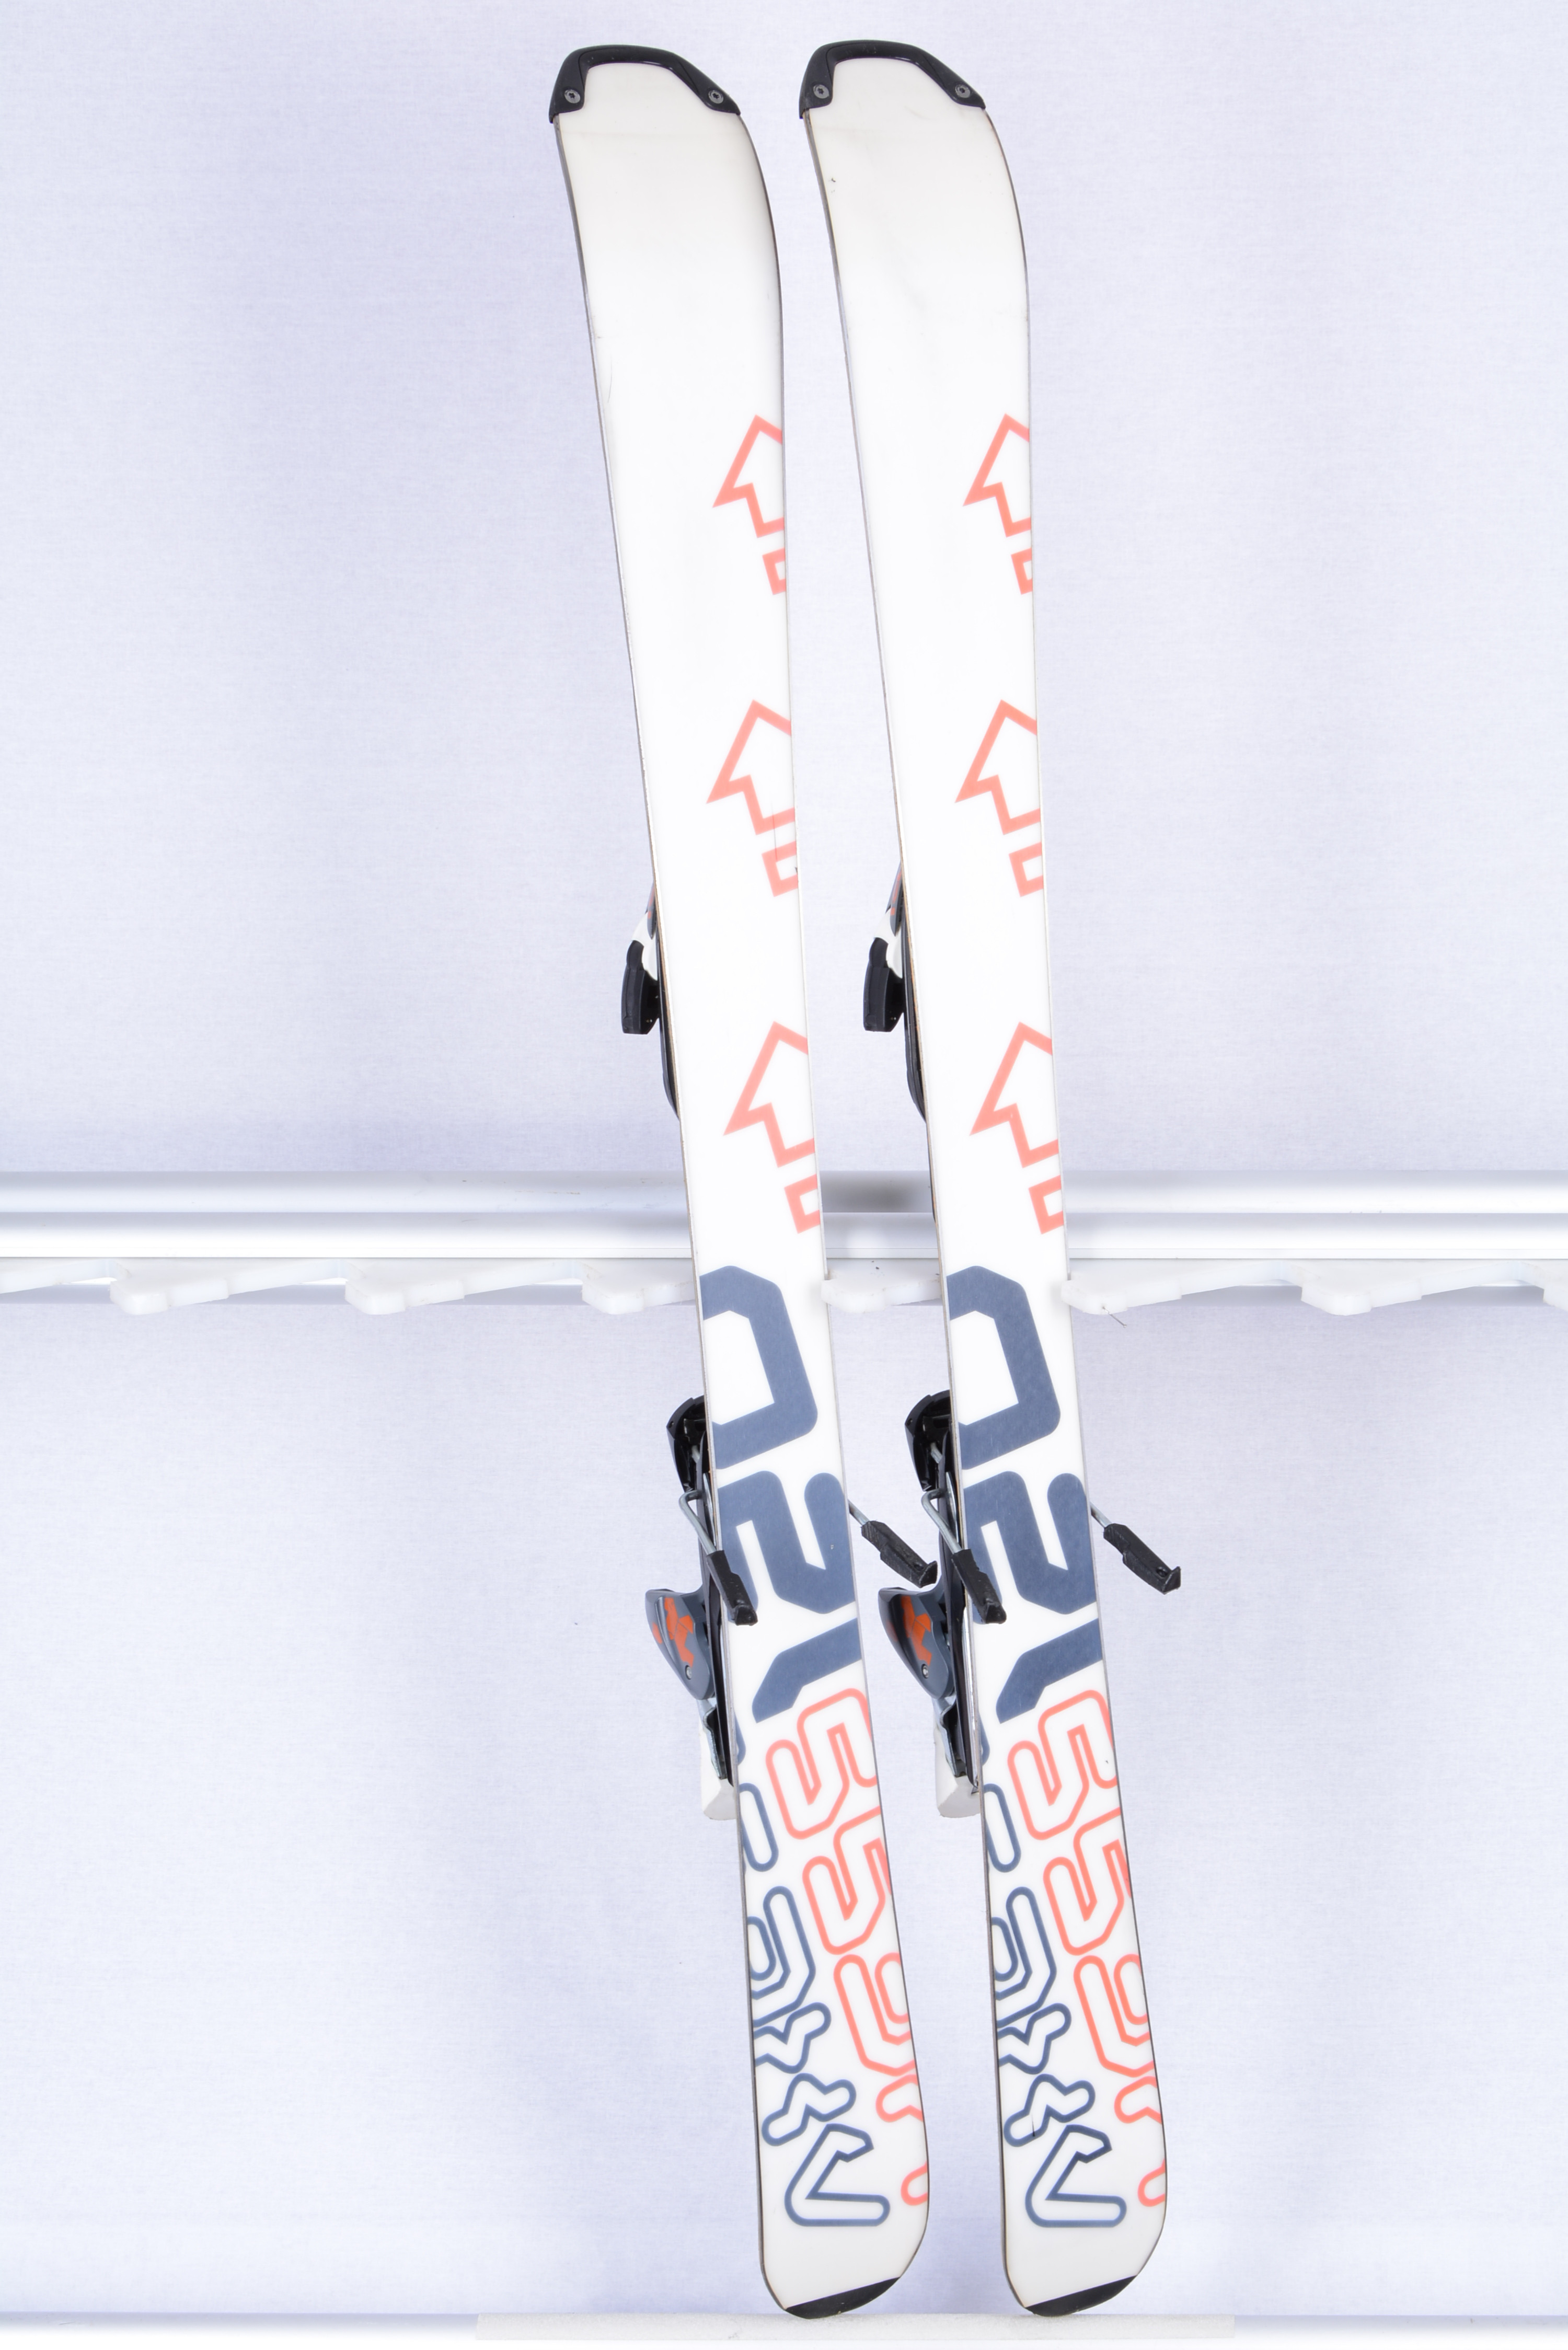 skis snowblade SALOMON AXESS, SNOWBLADE, BIGFOOT + Salomon 120